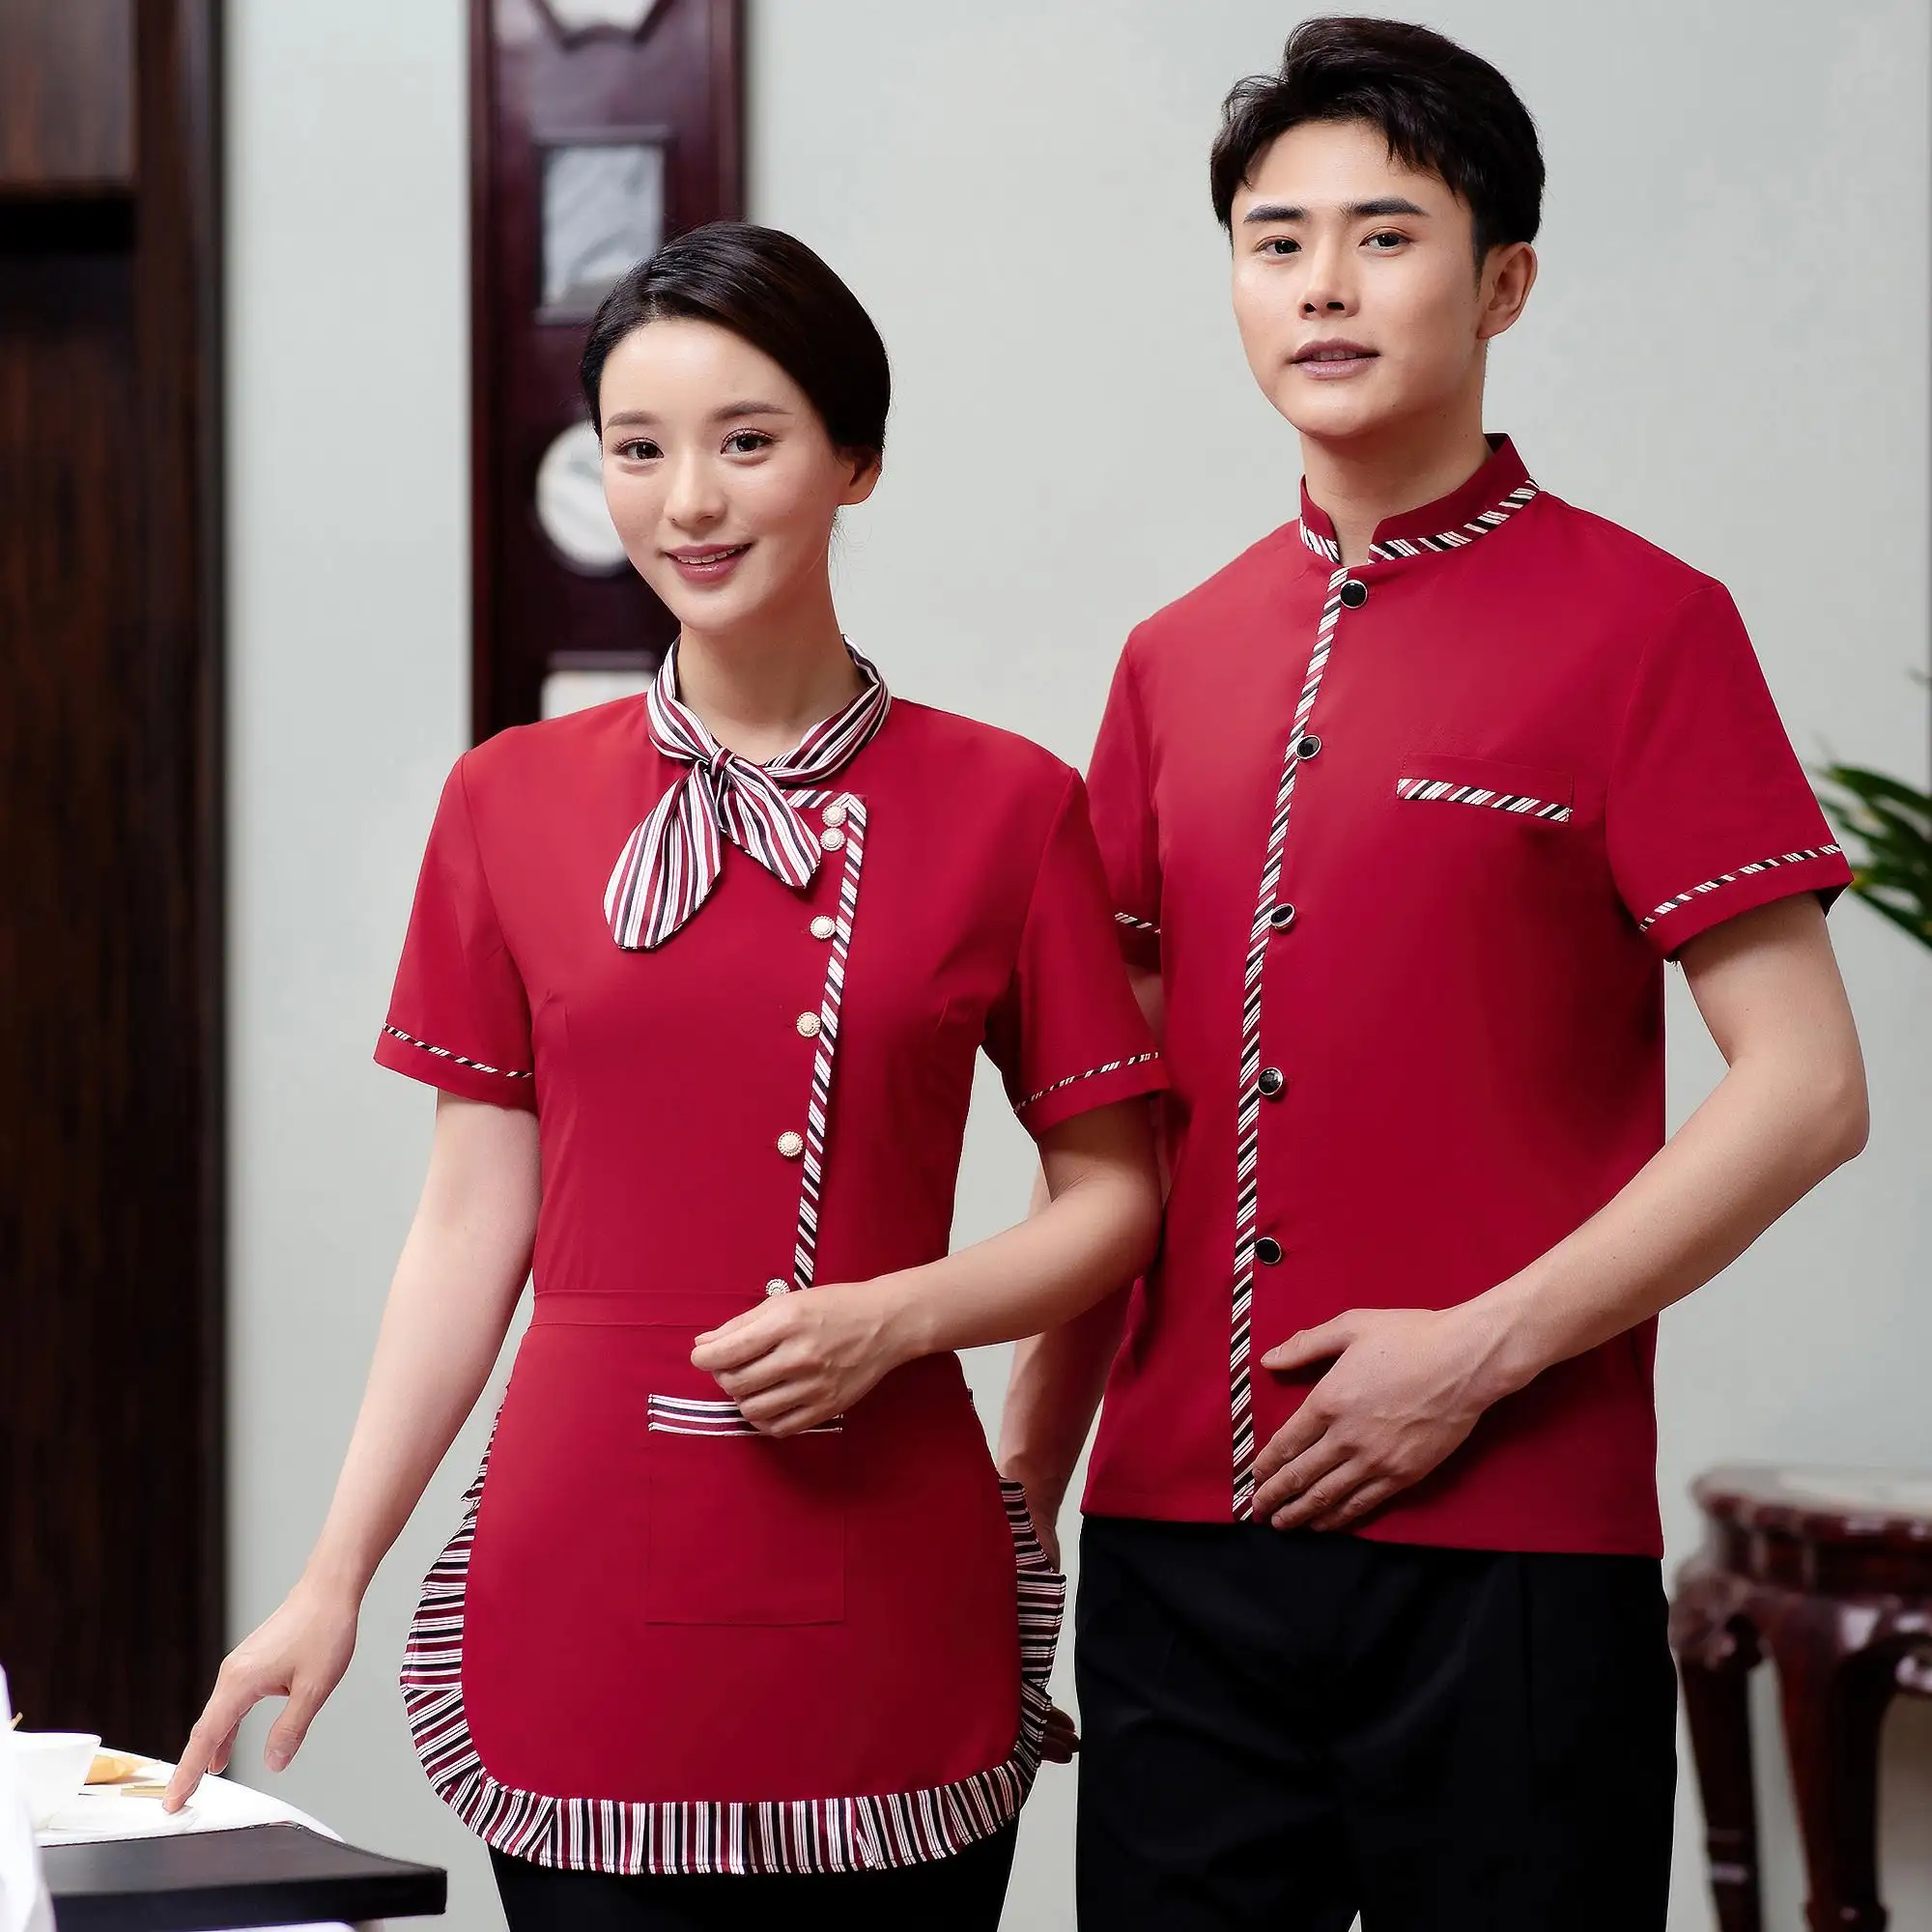 klassische bar-kellner und -kellnerin arbeitskleidung oem restaurant uniform designs formale restaurant asiatische baumwolle kellner-uniform